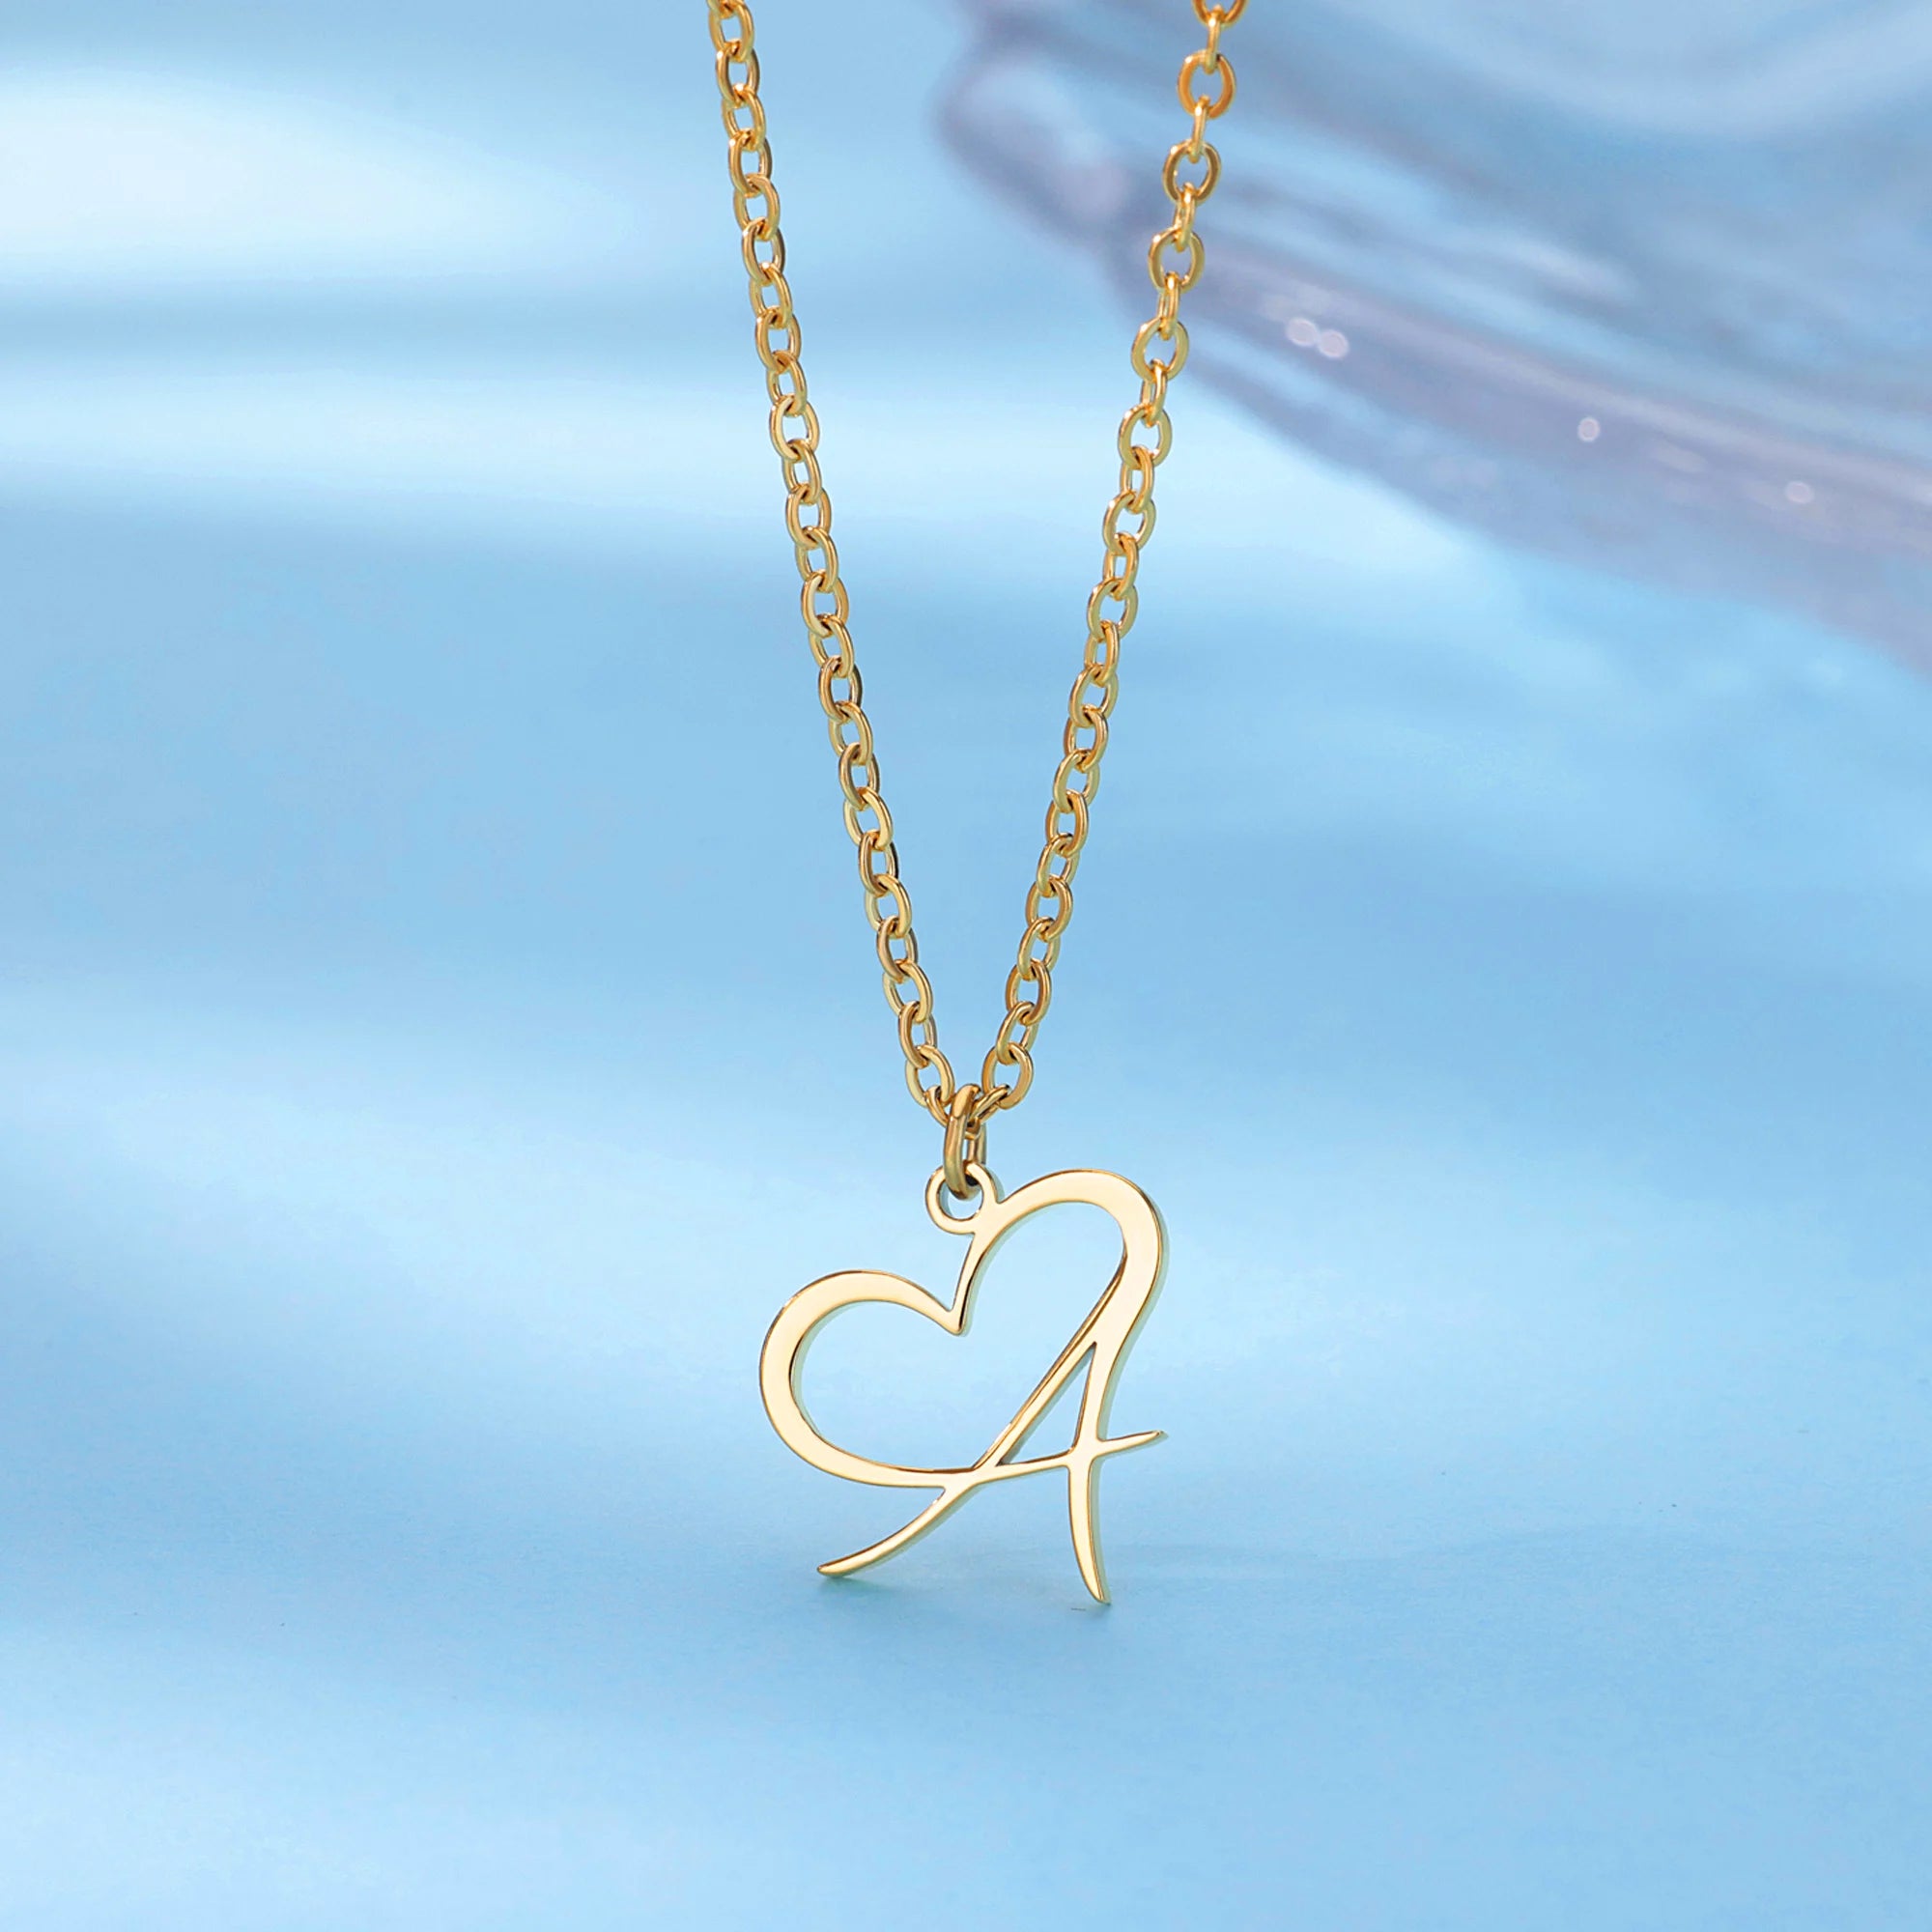 Exquisite Elegant Heart Initial Letter Pendant Necklace